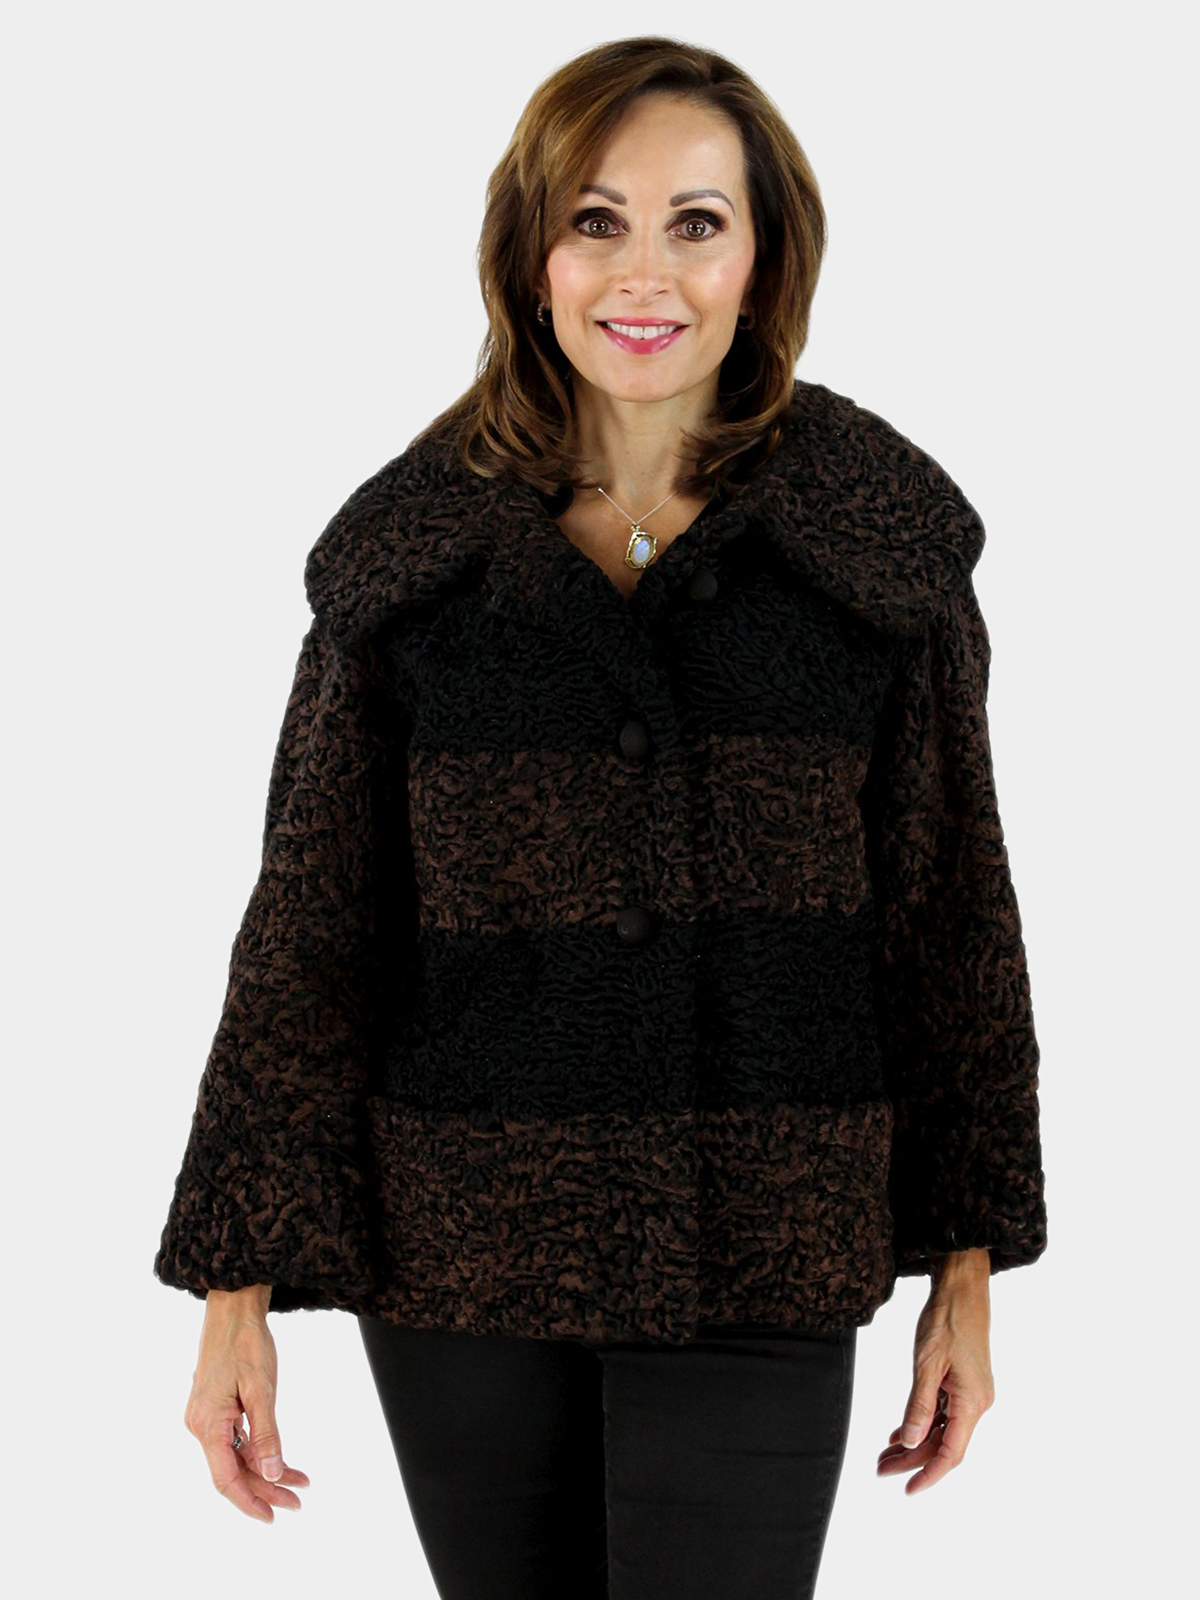 Woman's Brown and Black Persian Lamb Fur Jacket